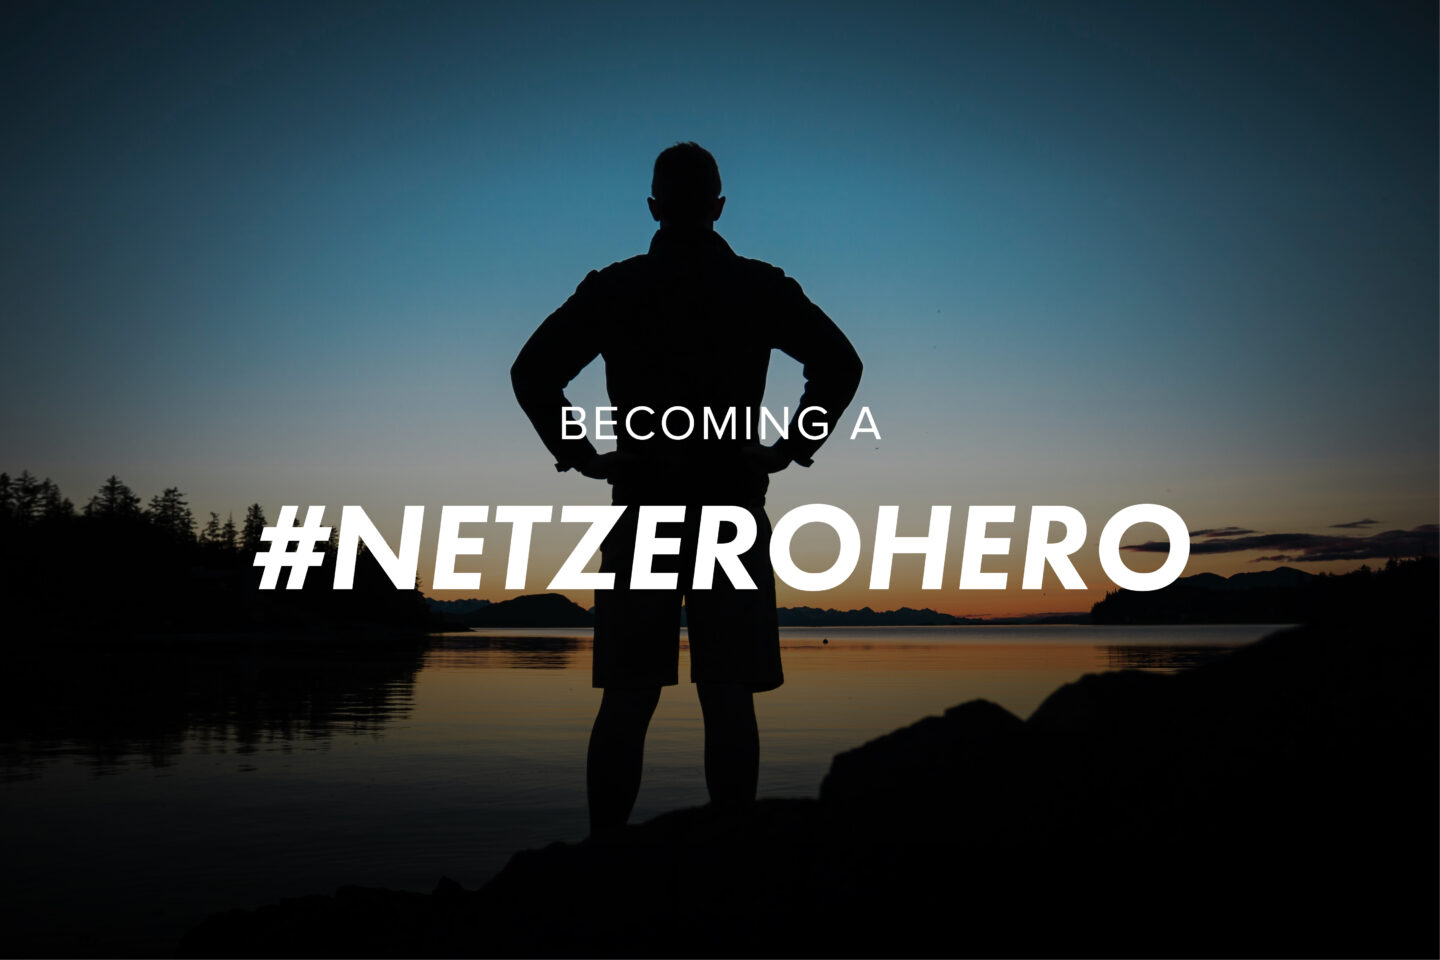 Becoming a #NETZEROHERO